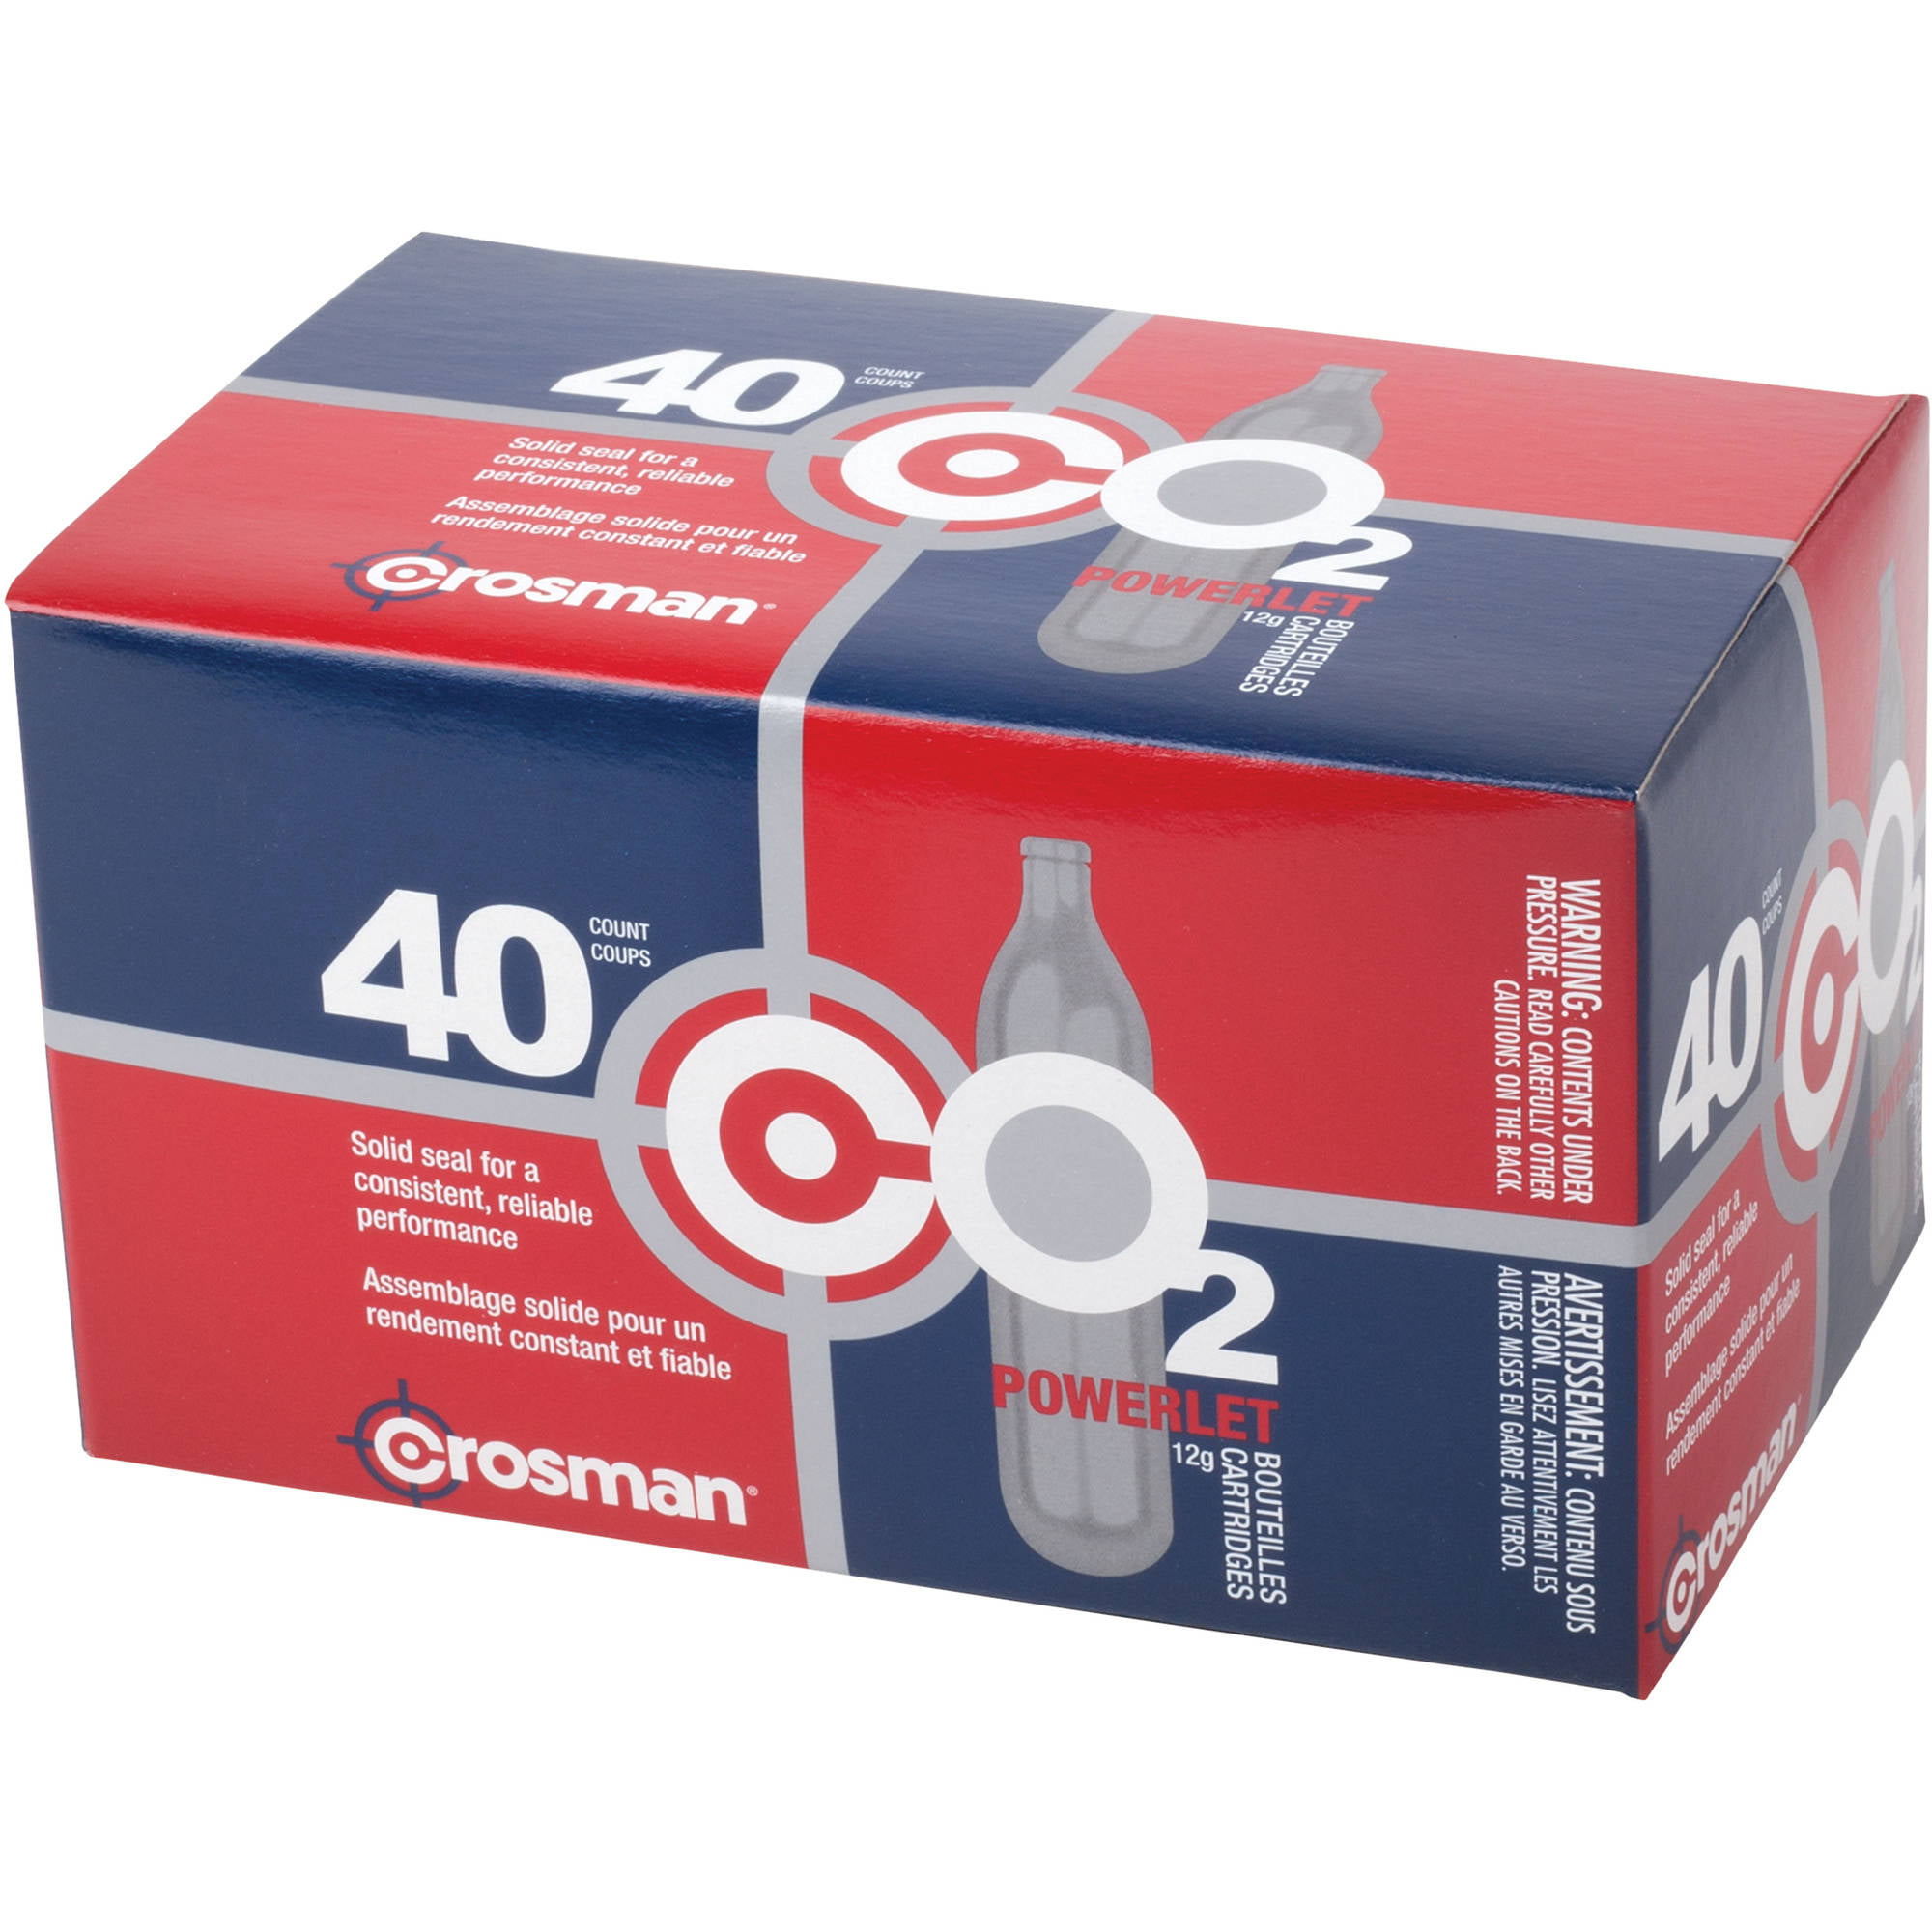 Crosman 12-gram Co2 Powerlets, 40ct - image 1 of 2